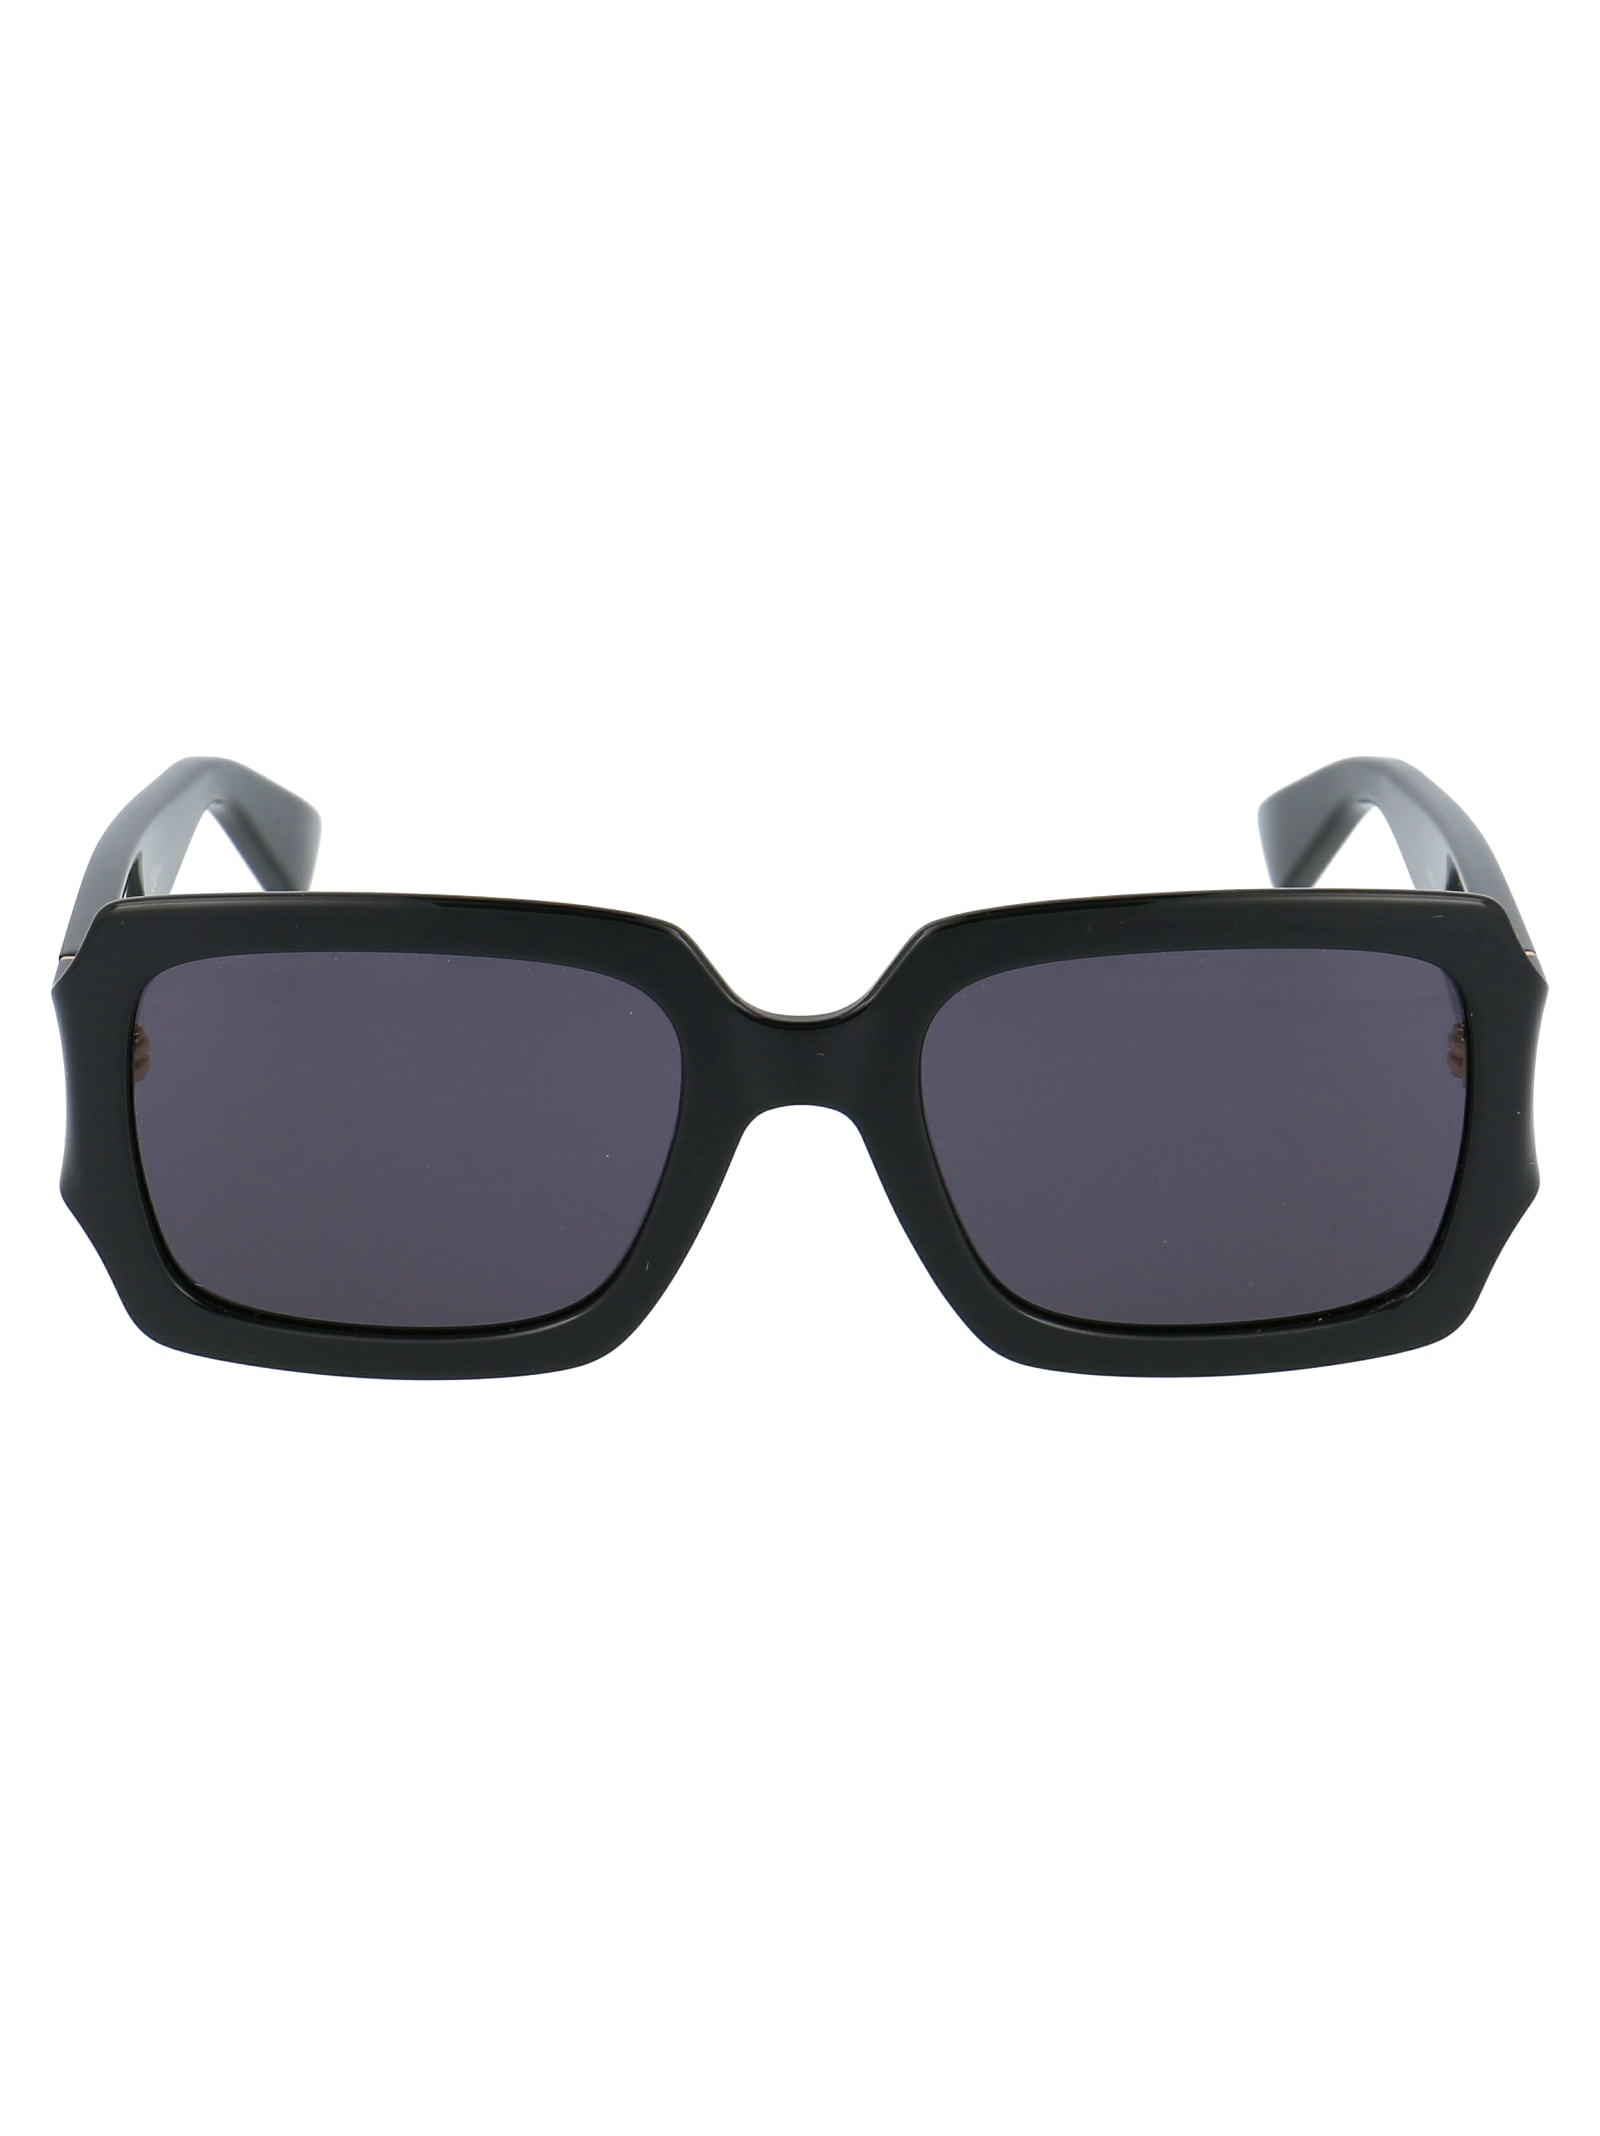 Moschino Mos063/s Sunglasses